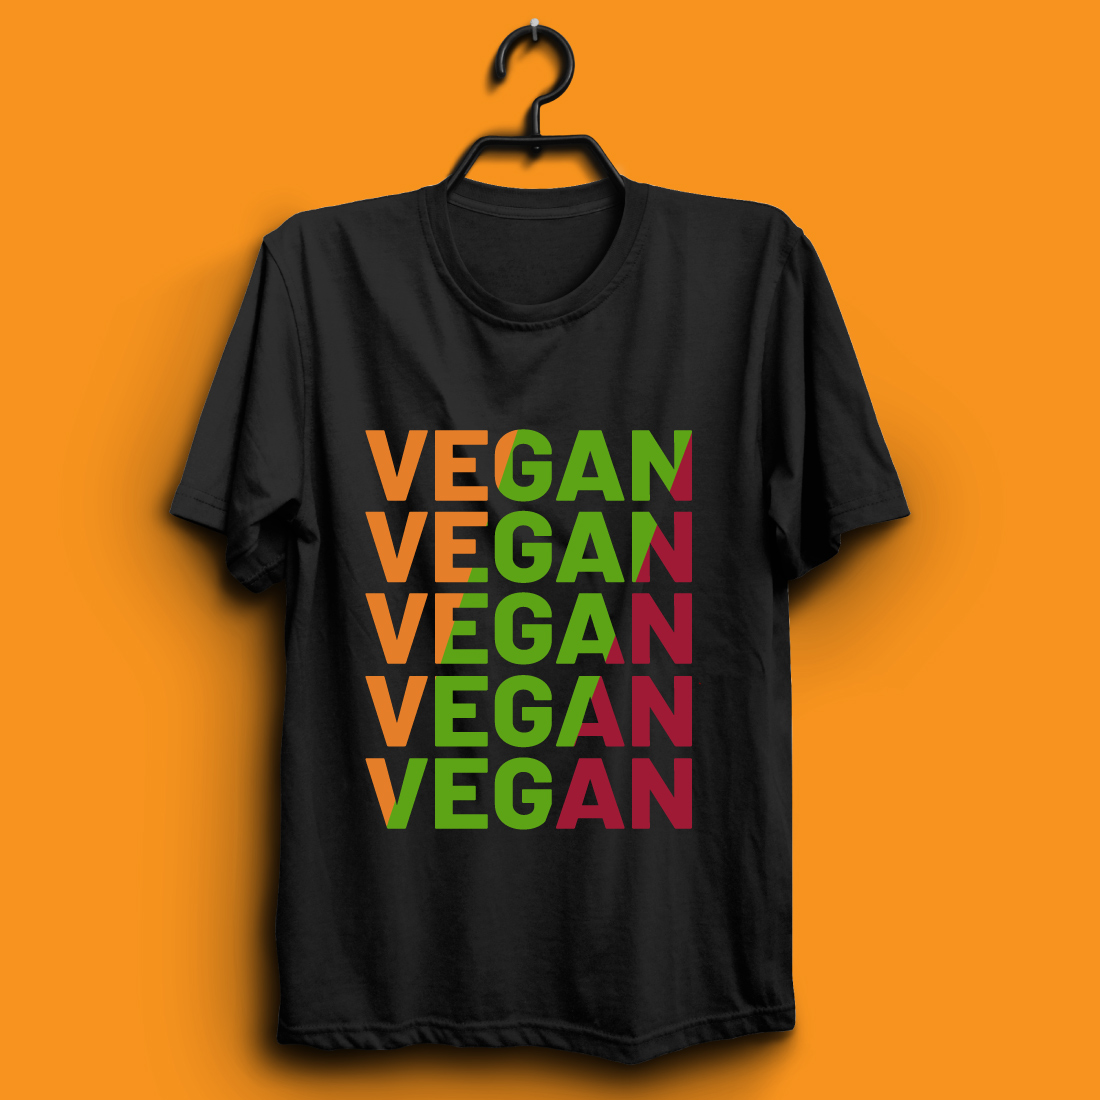 world vegan day t shirt design04 348